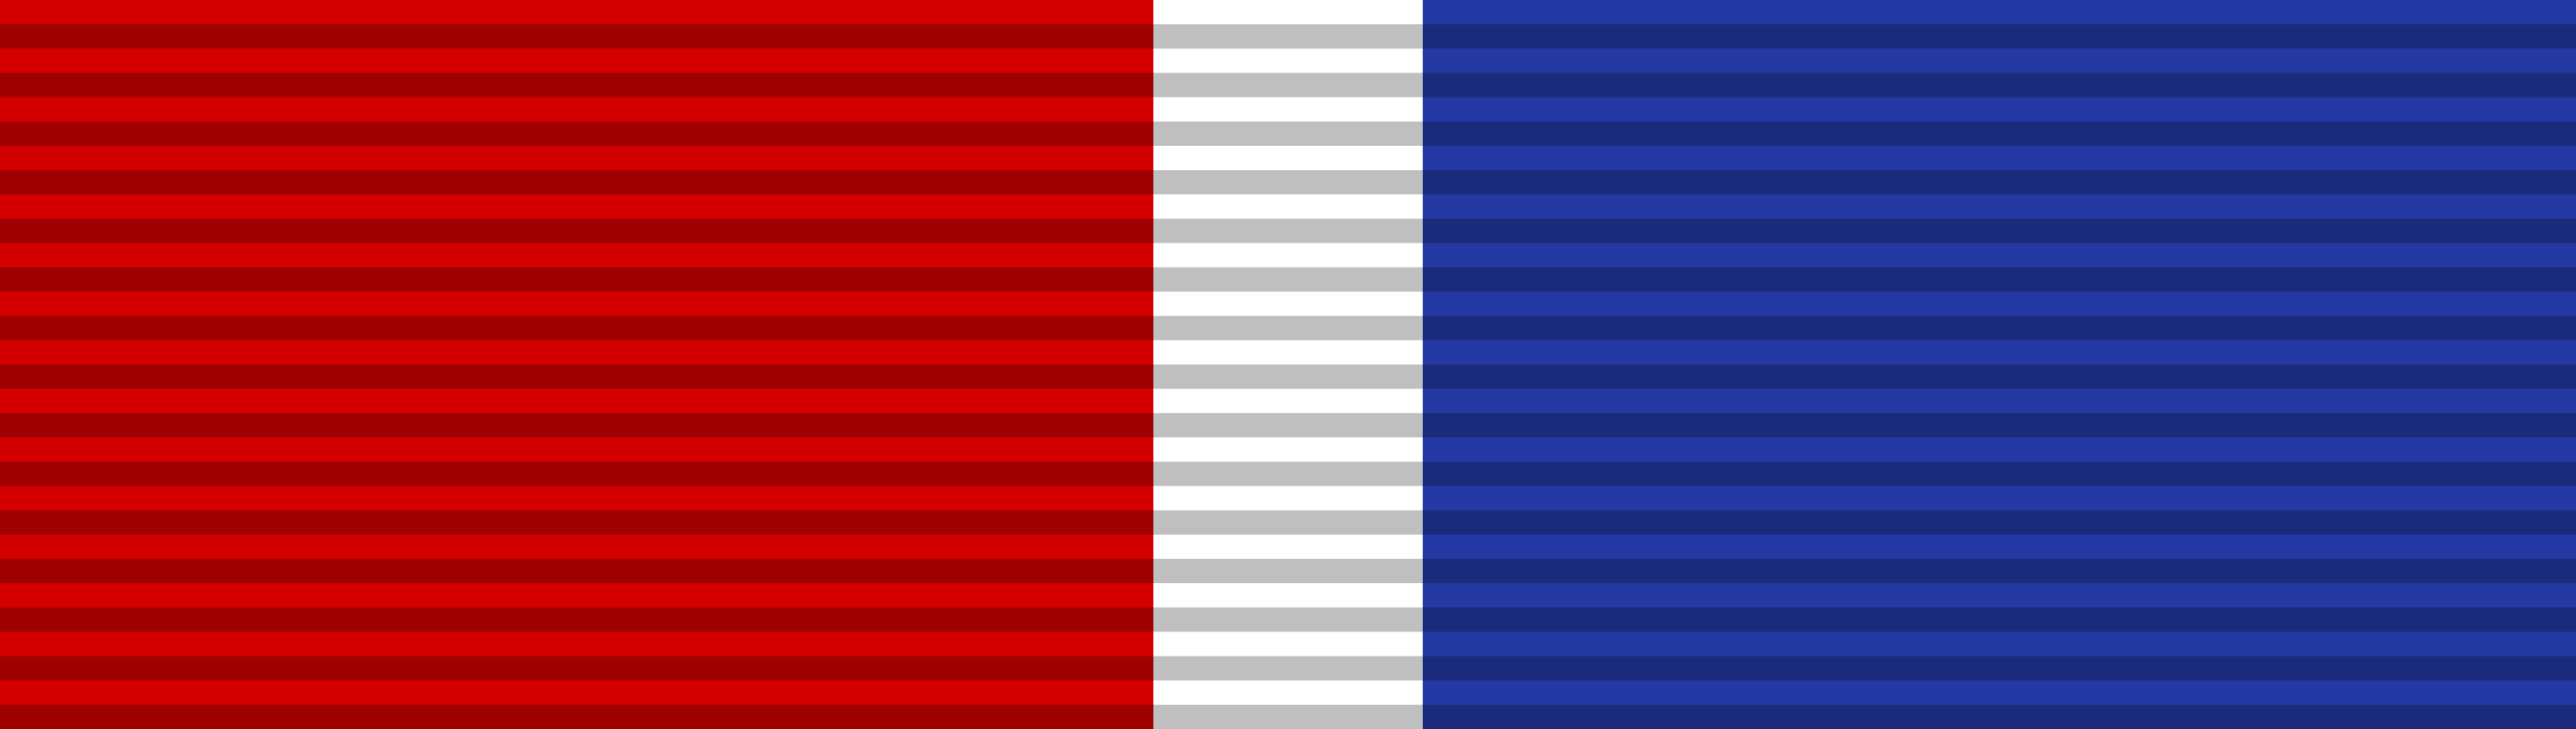 Merchant Marine Mariners Medal